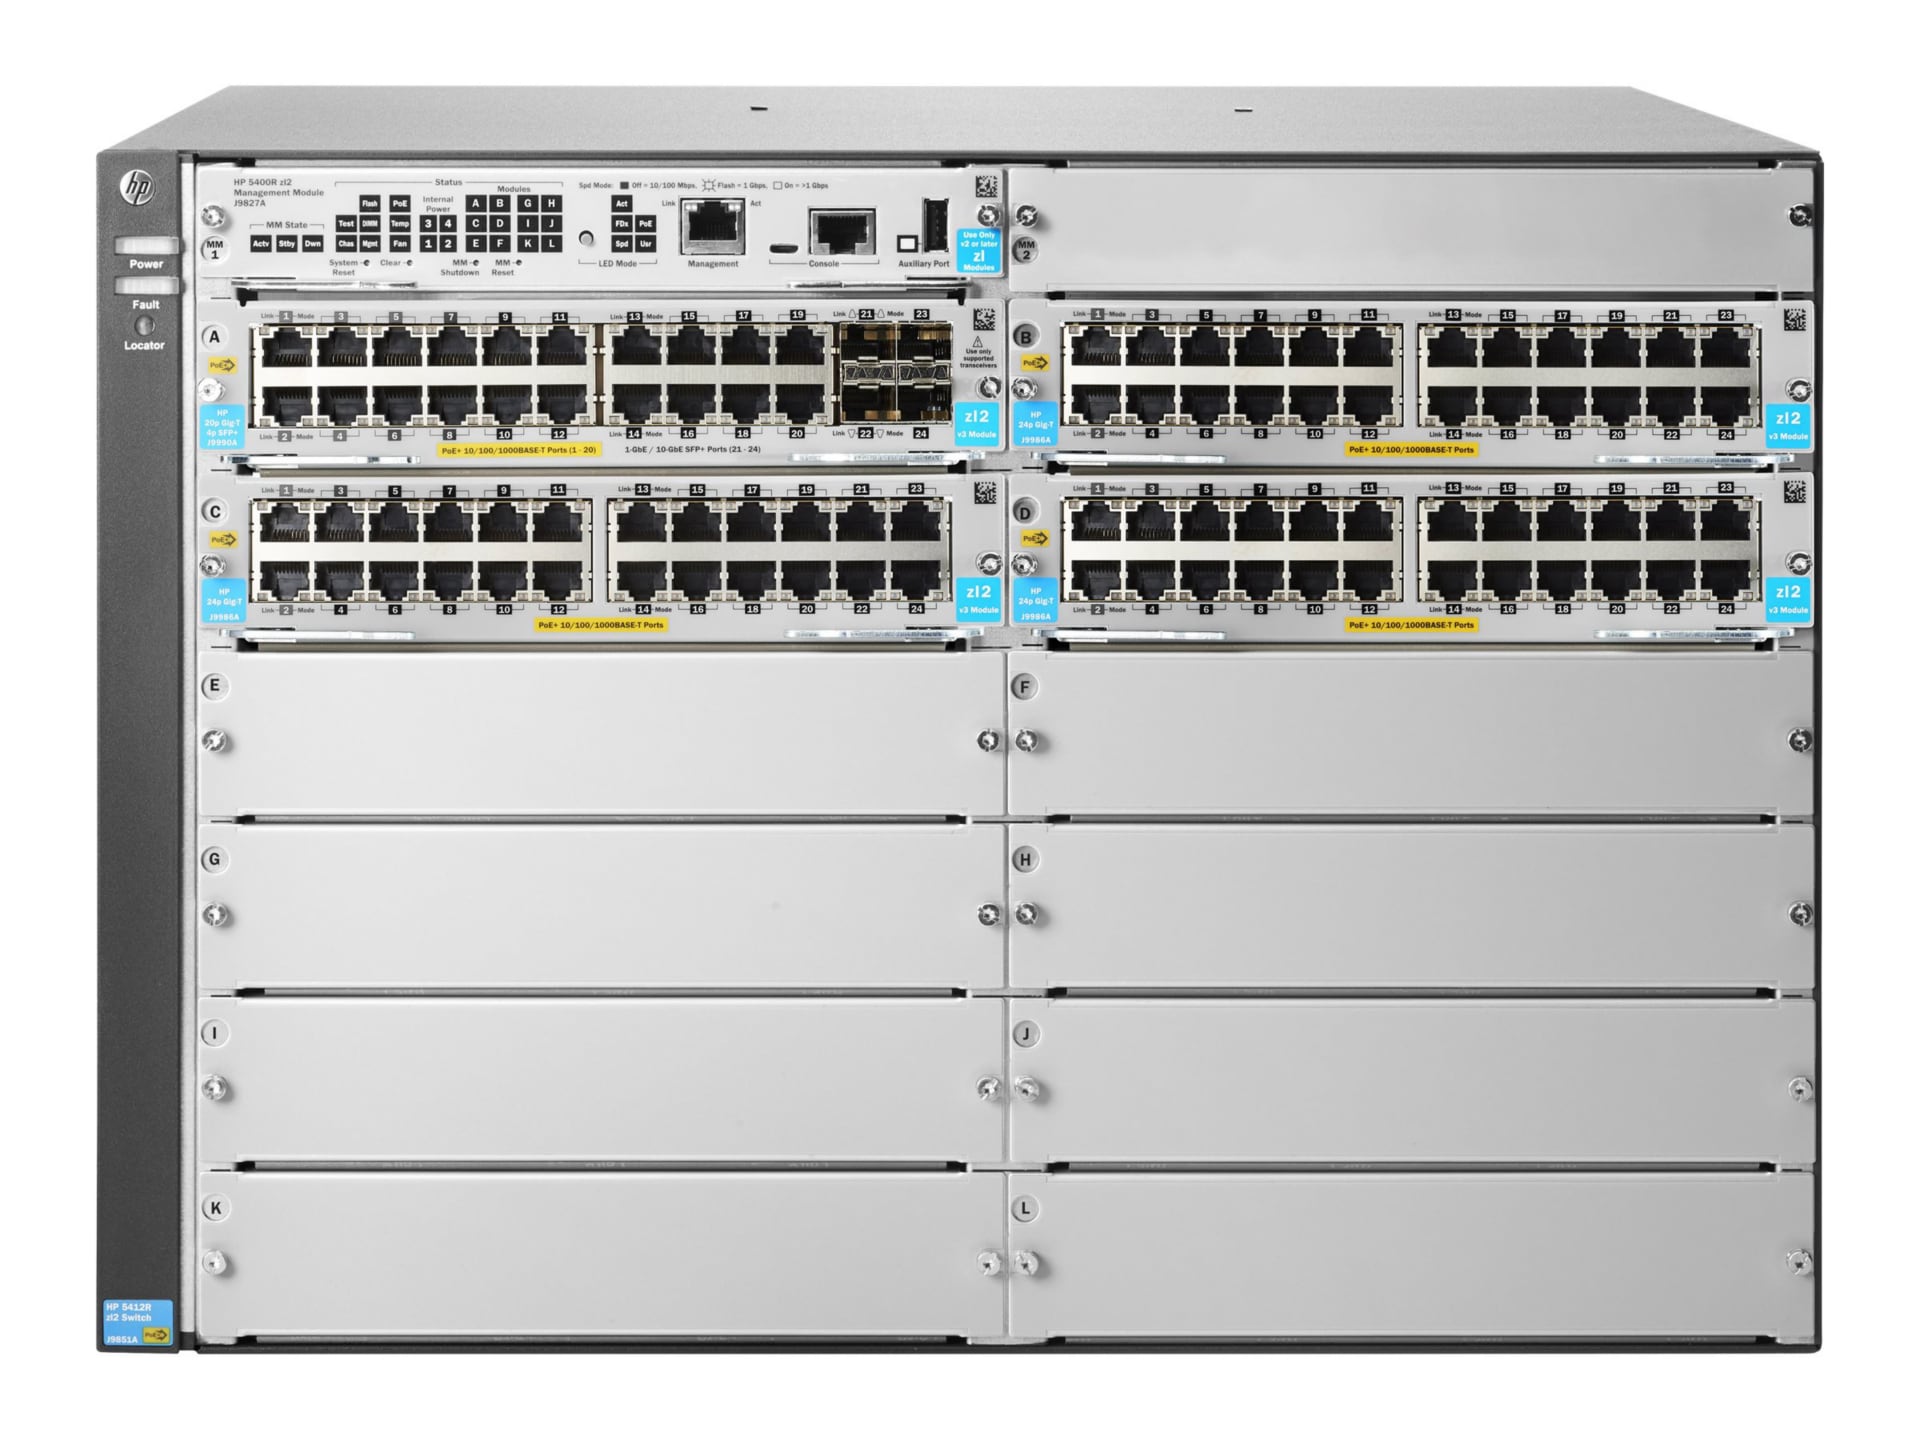 HPE Aruba 5412R 92GT PoE+ / 4SFP+ (No PSU) v3 zl2 - switch - 92 ports - managed - rack-mountable